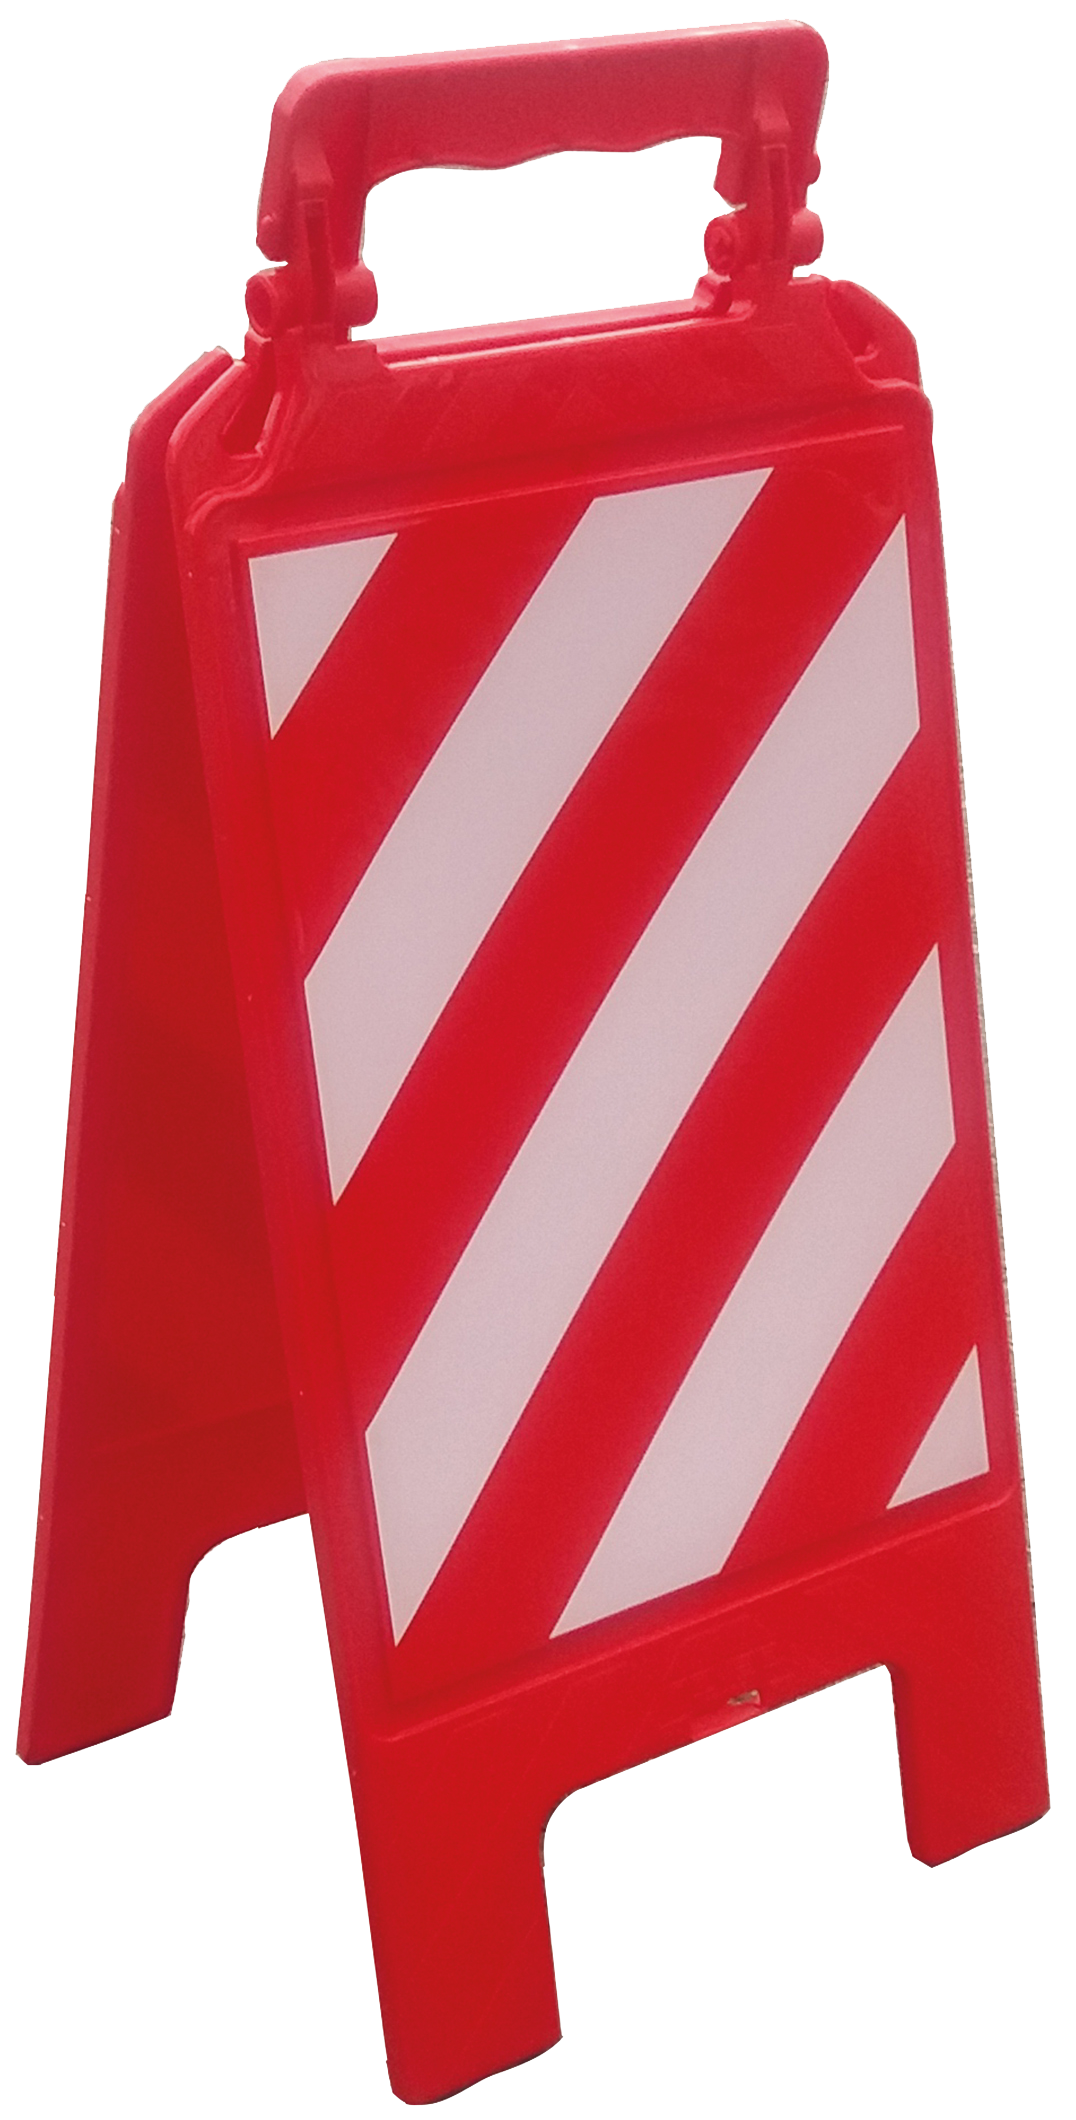 Panel plegable franjas blanca y roja.